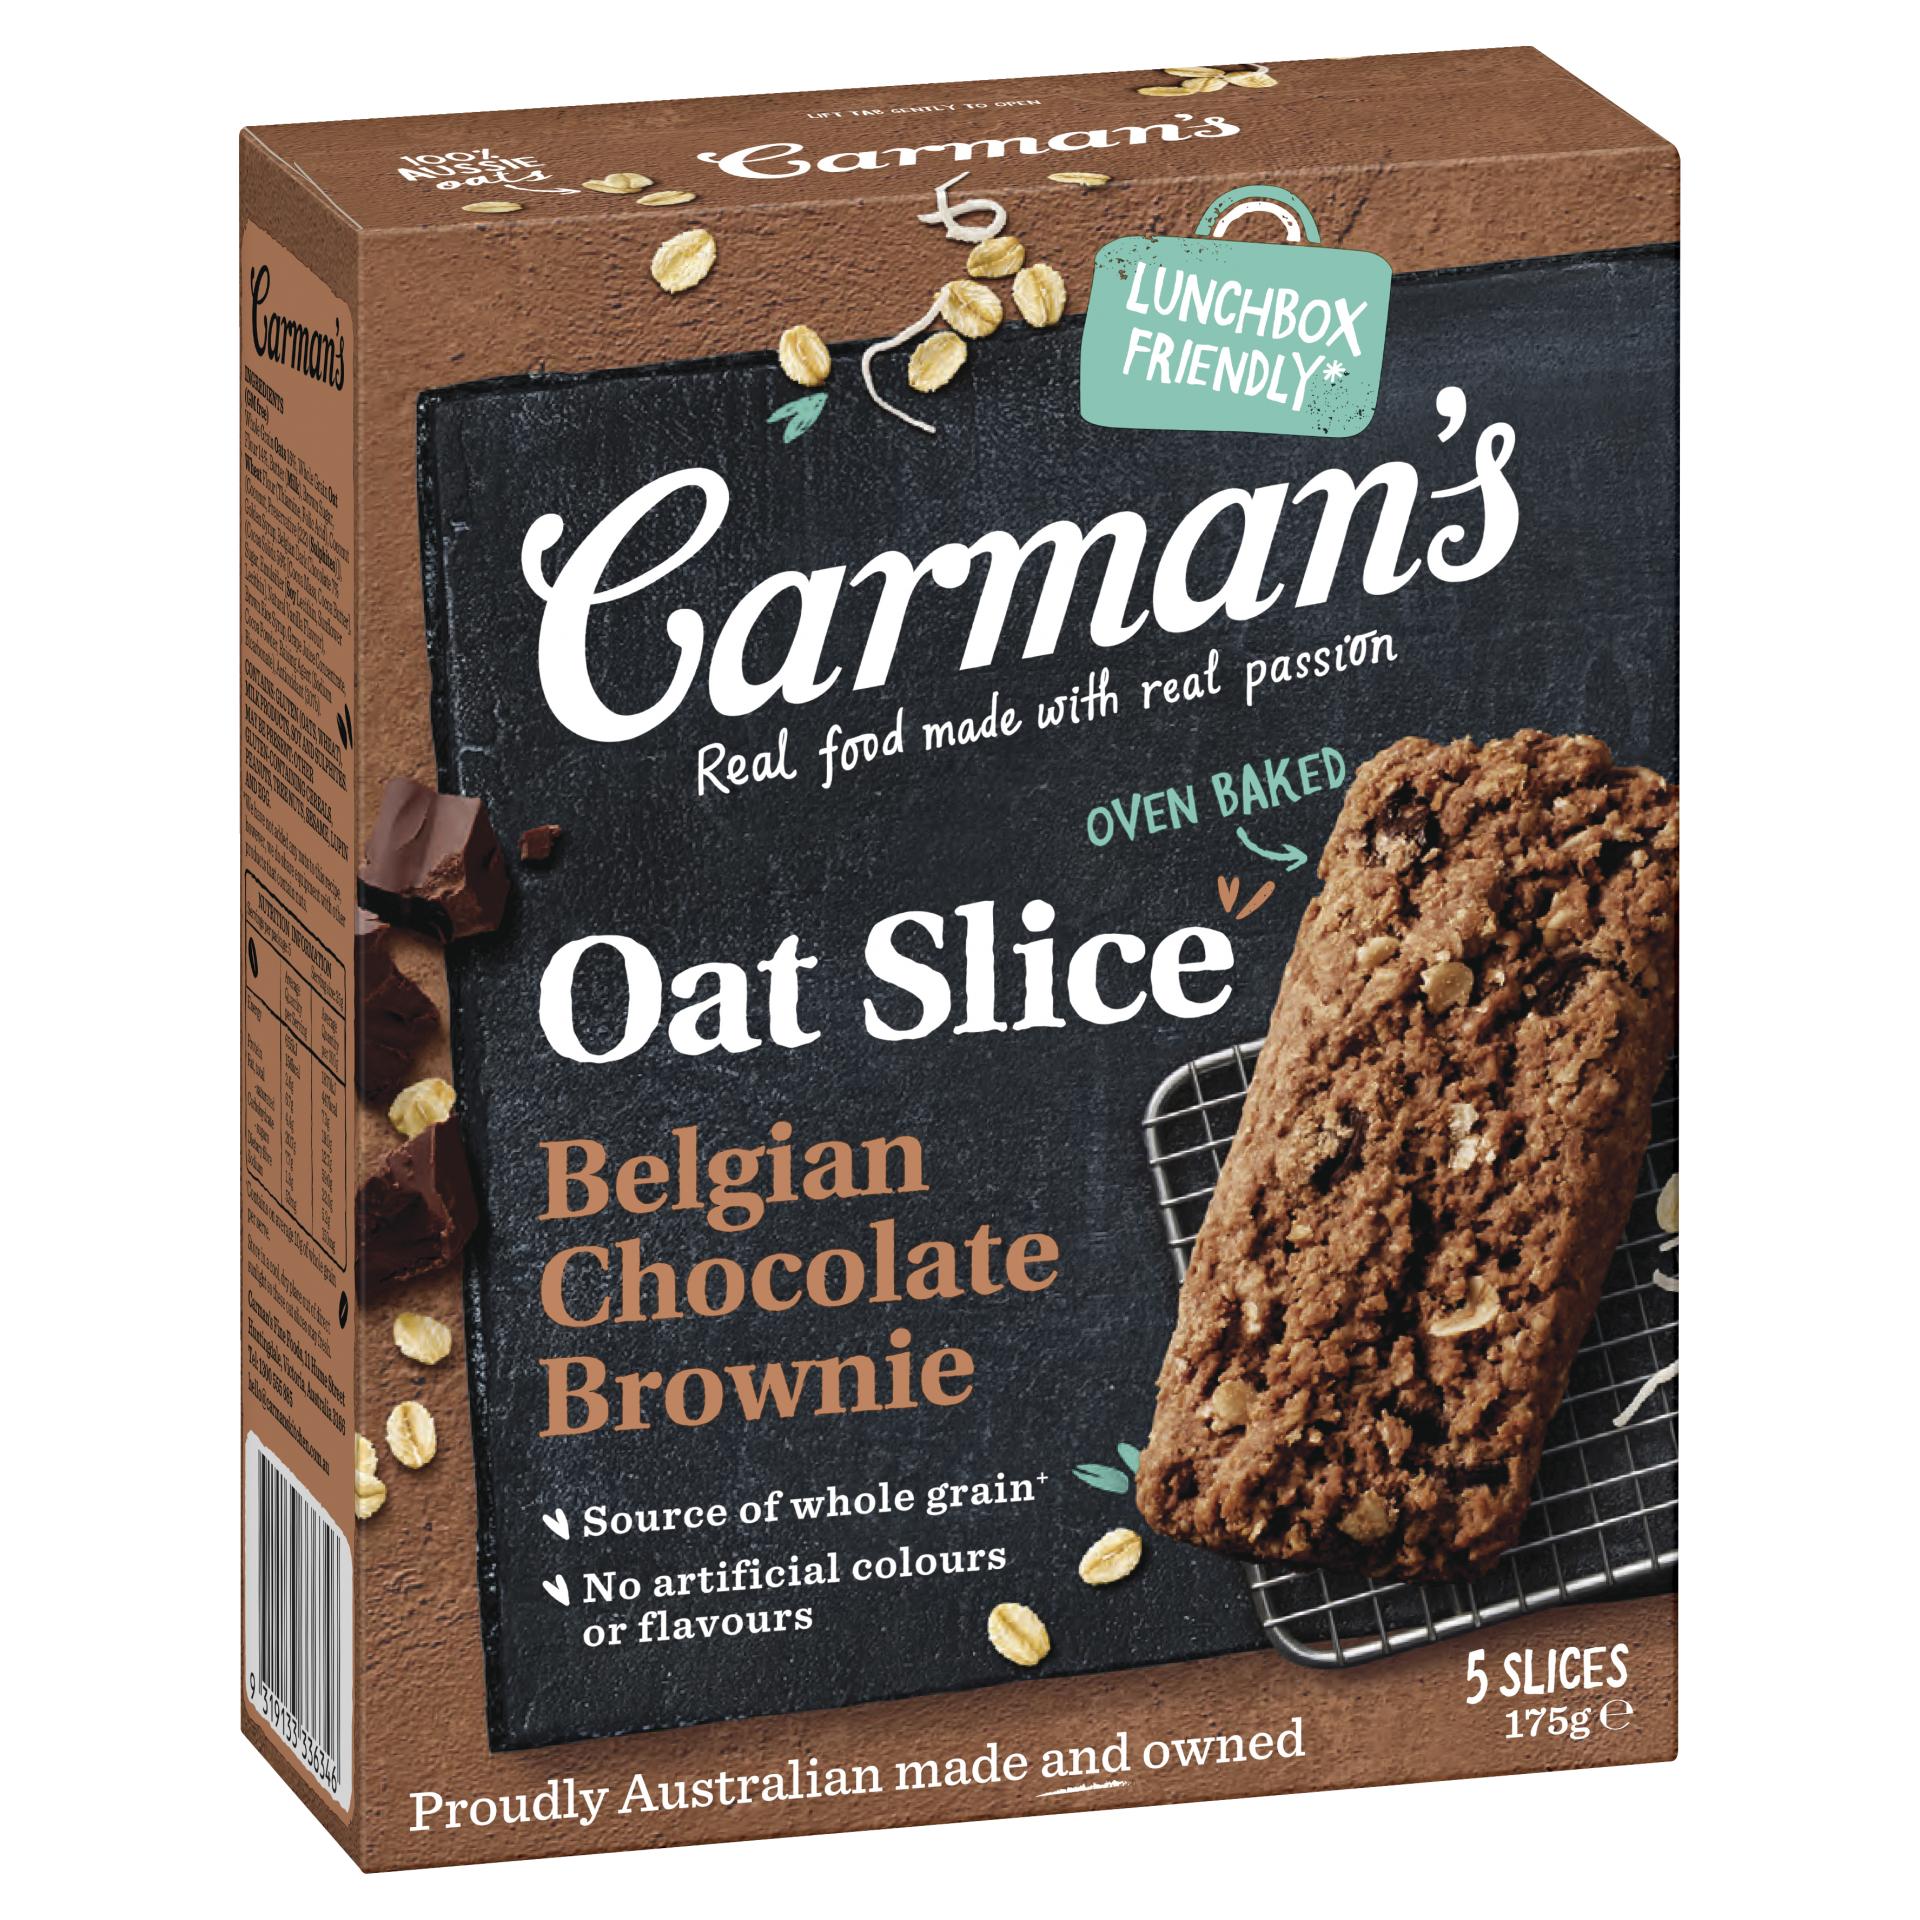 Carman's Oat Slice - Belgiam Chocolate Brownie 35g